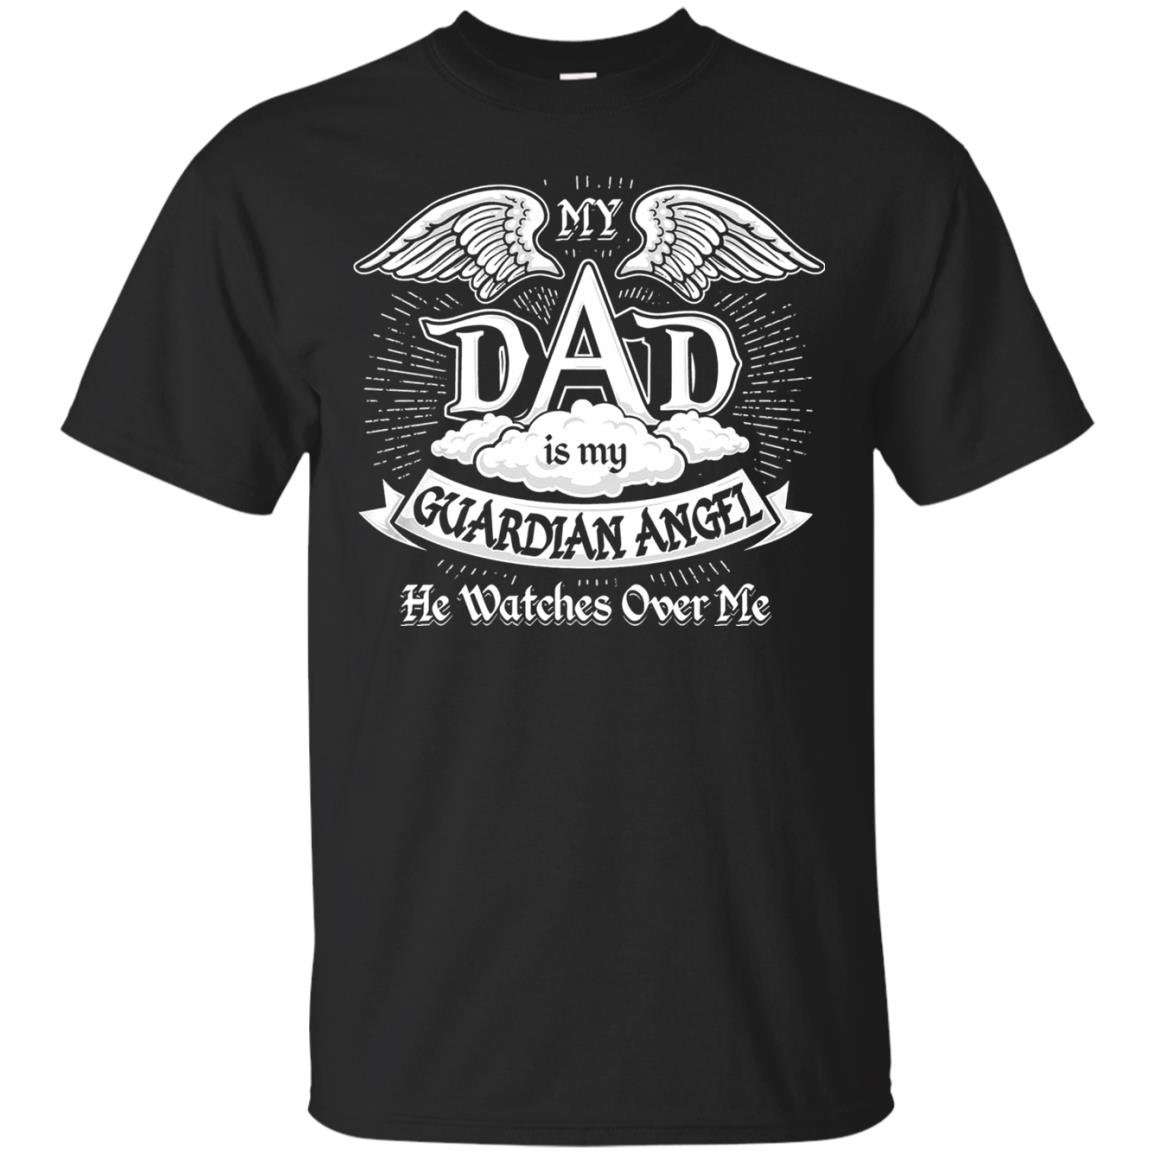 my dad is my guardian angel shirt - black